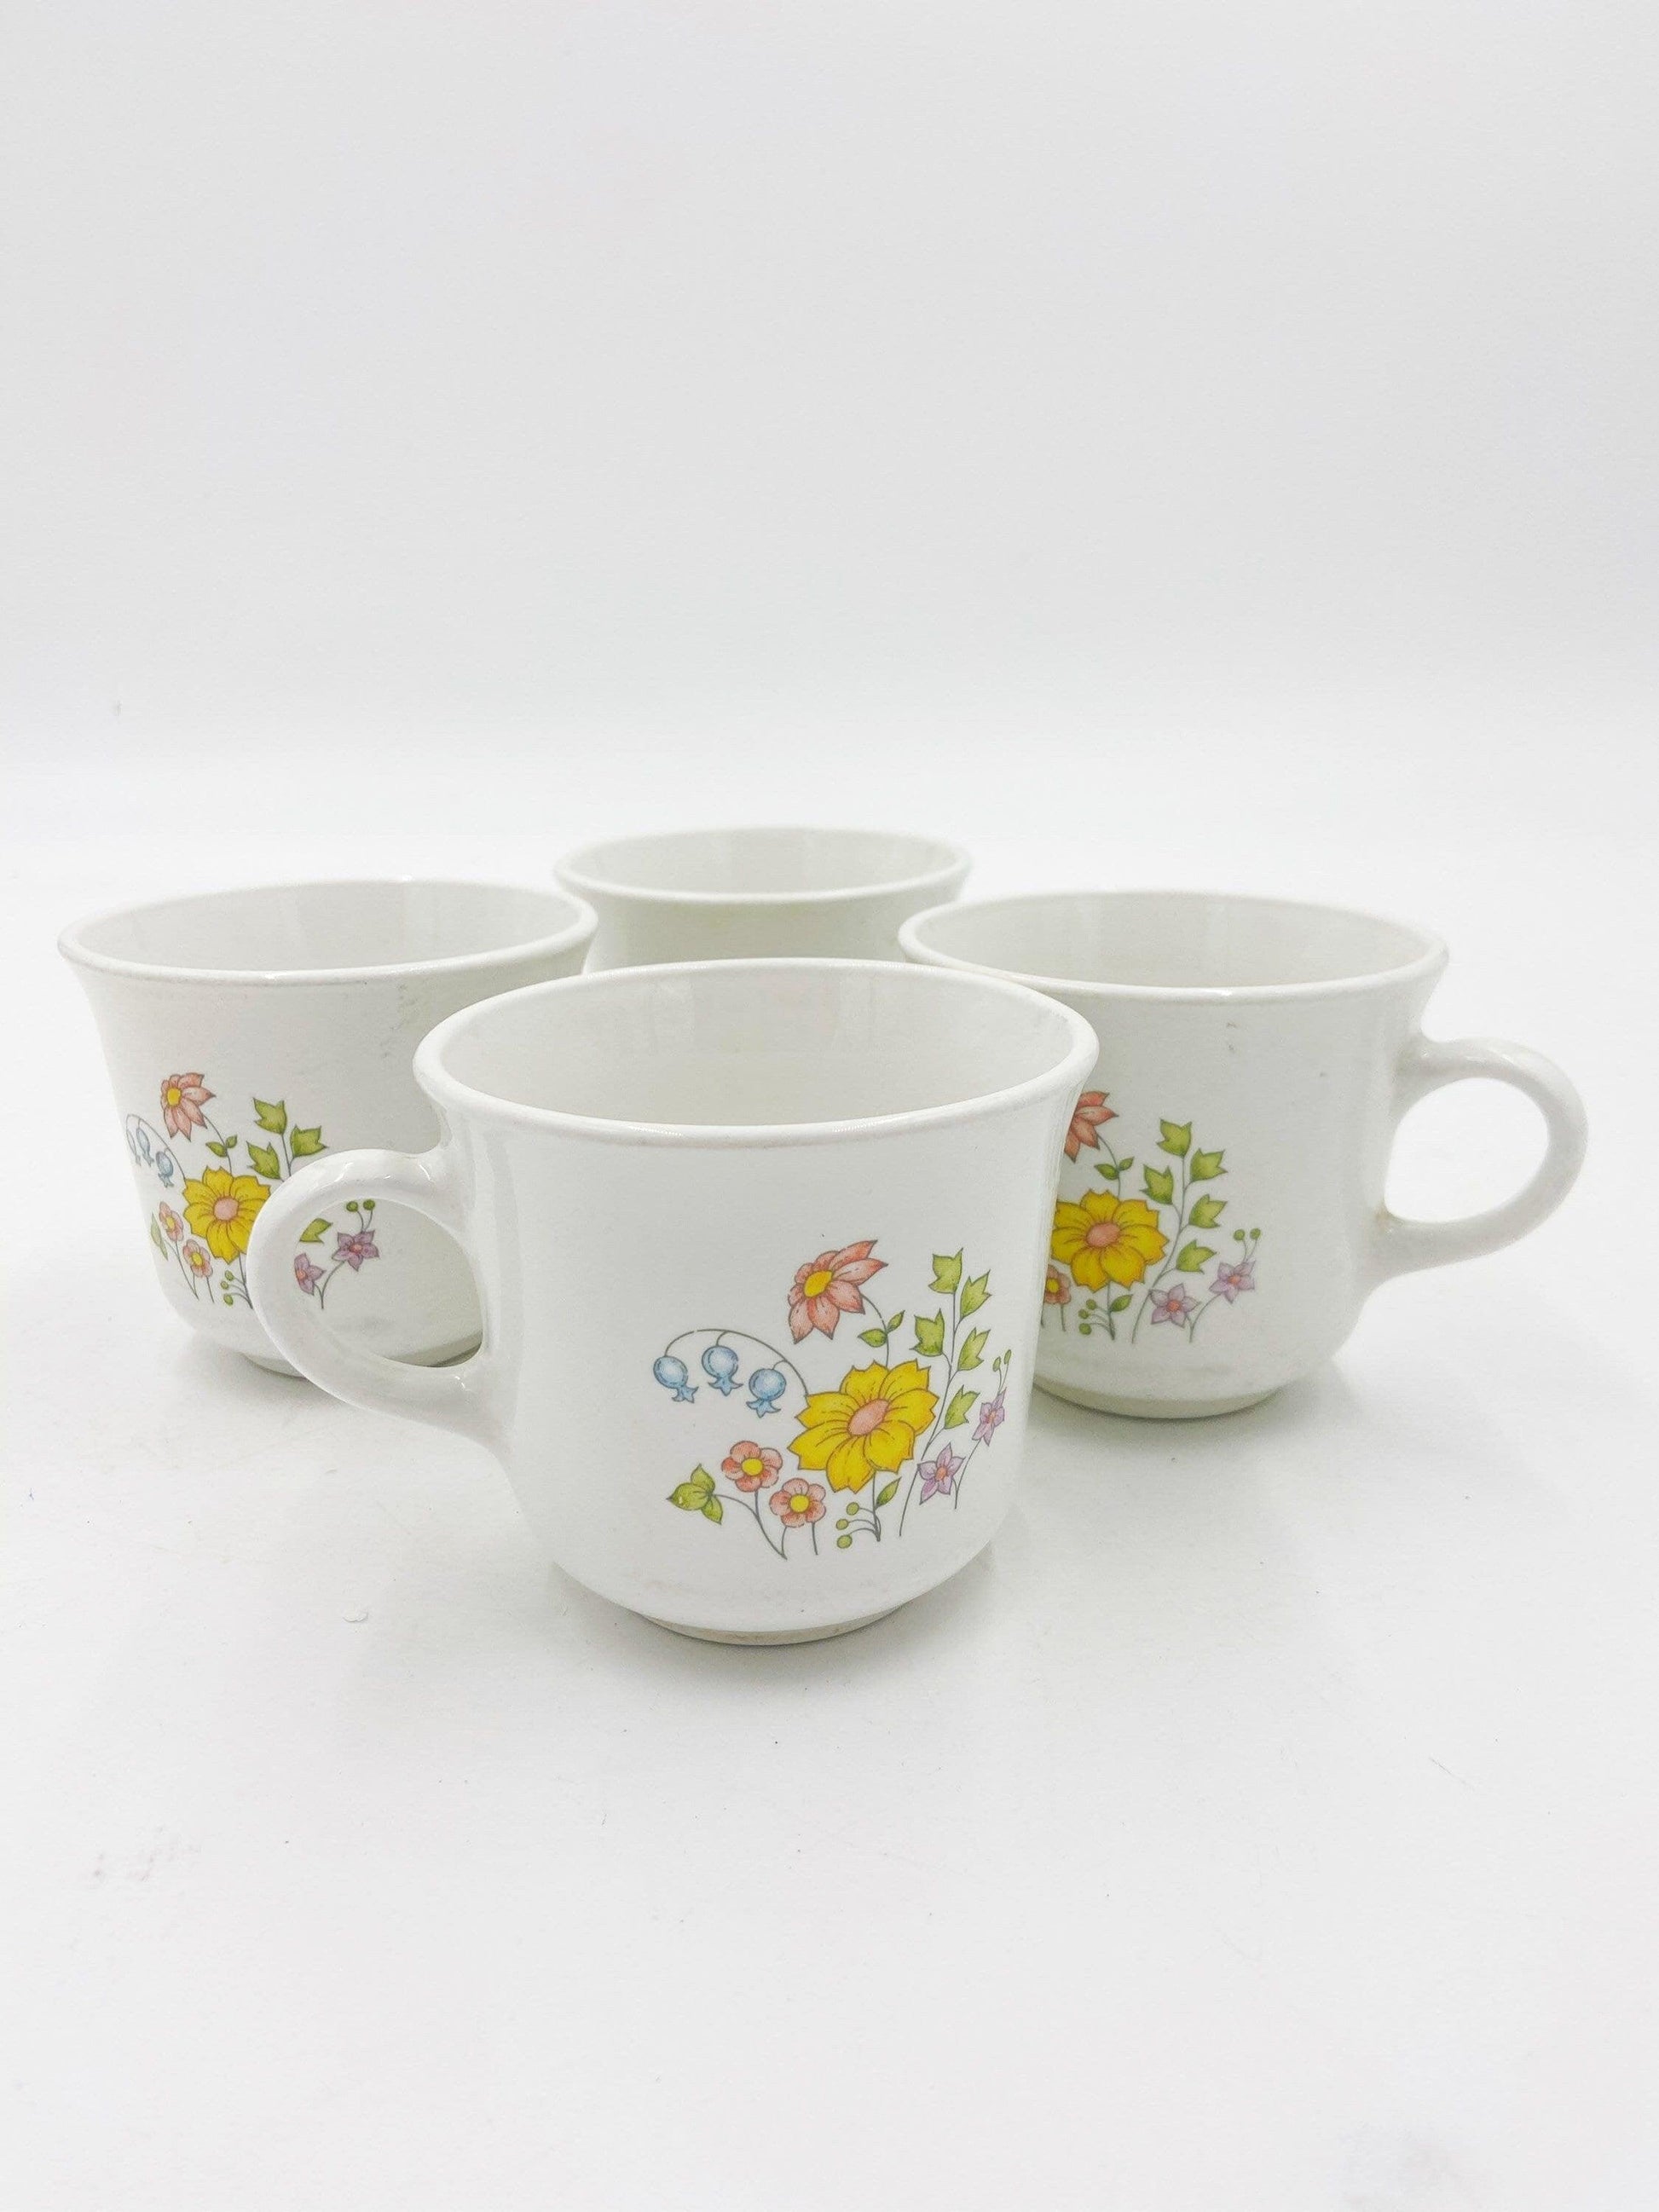 Vintage Corelle Coffee Or Tea Cups, Set of 4 Mugs in Meadow Pattern